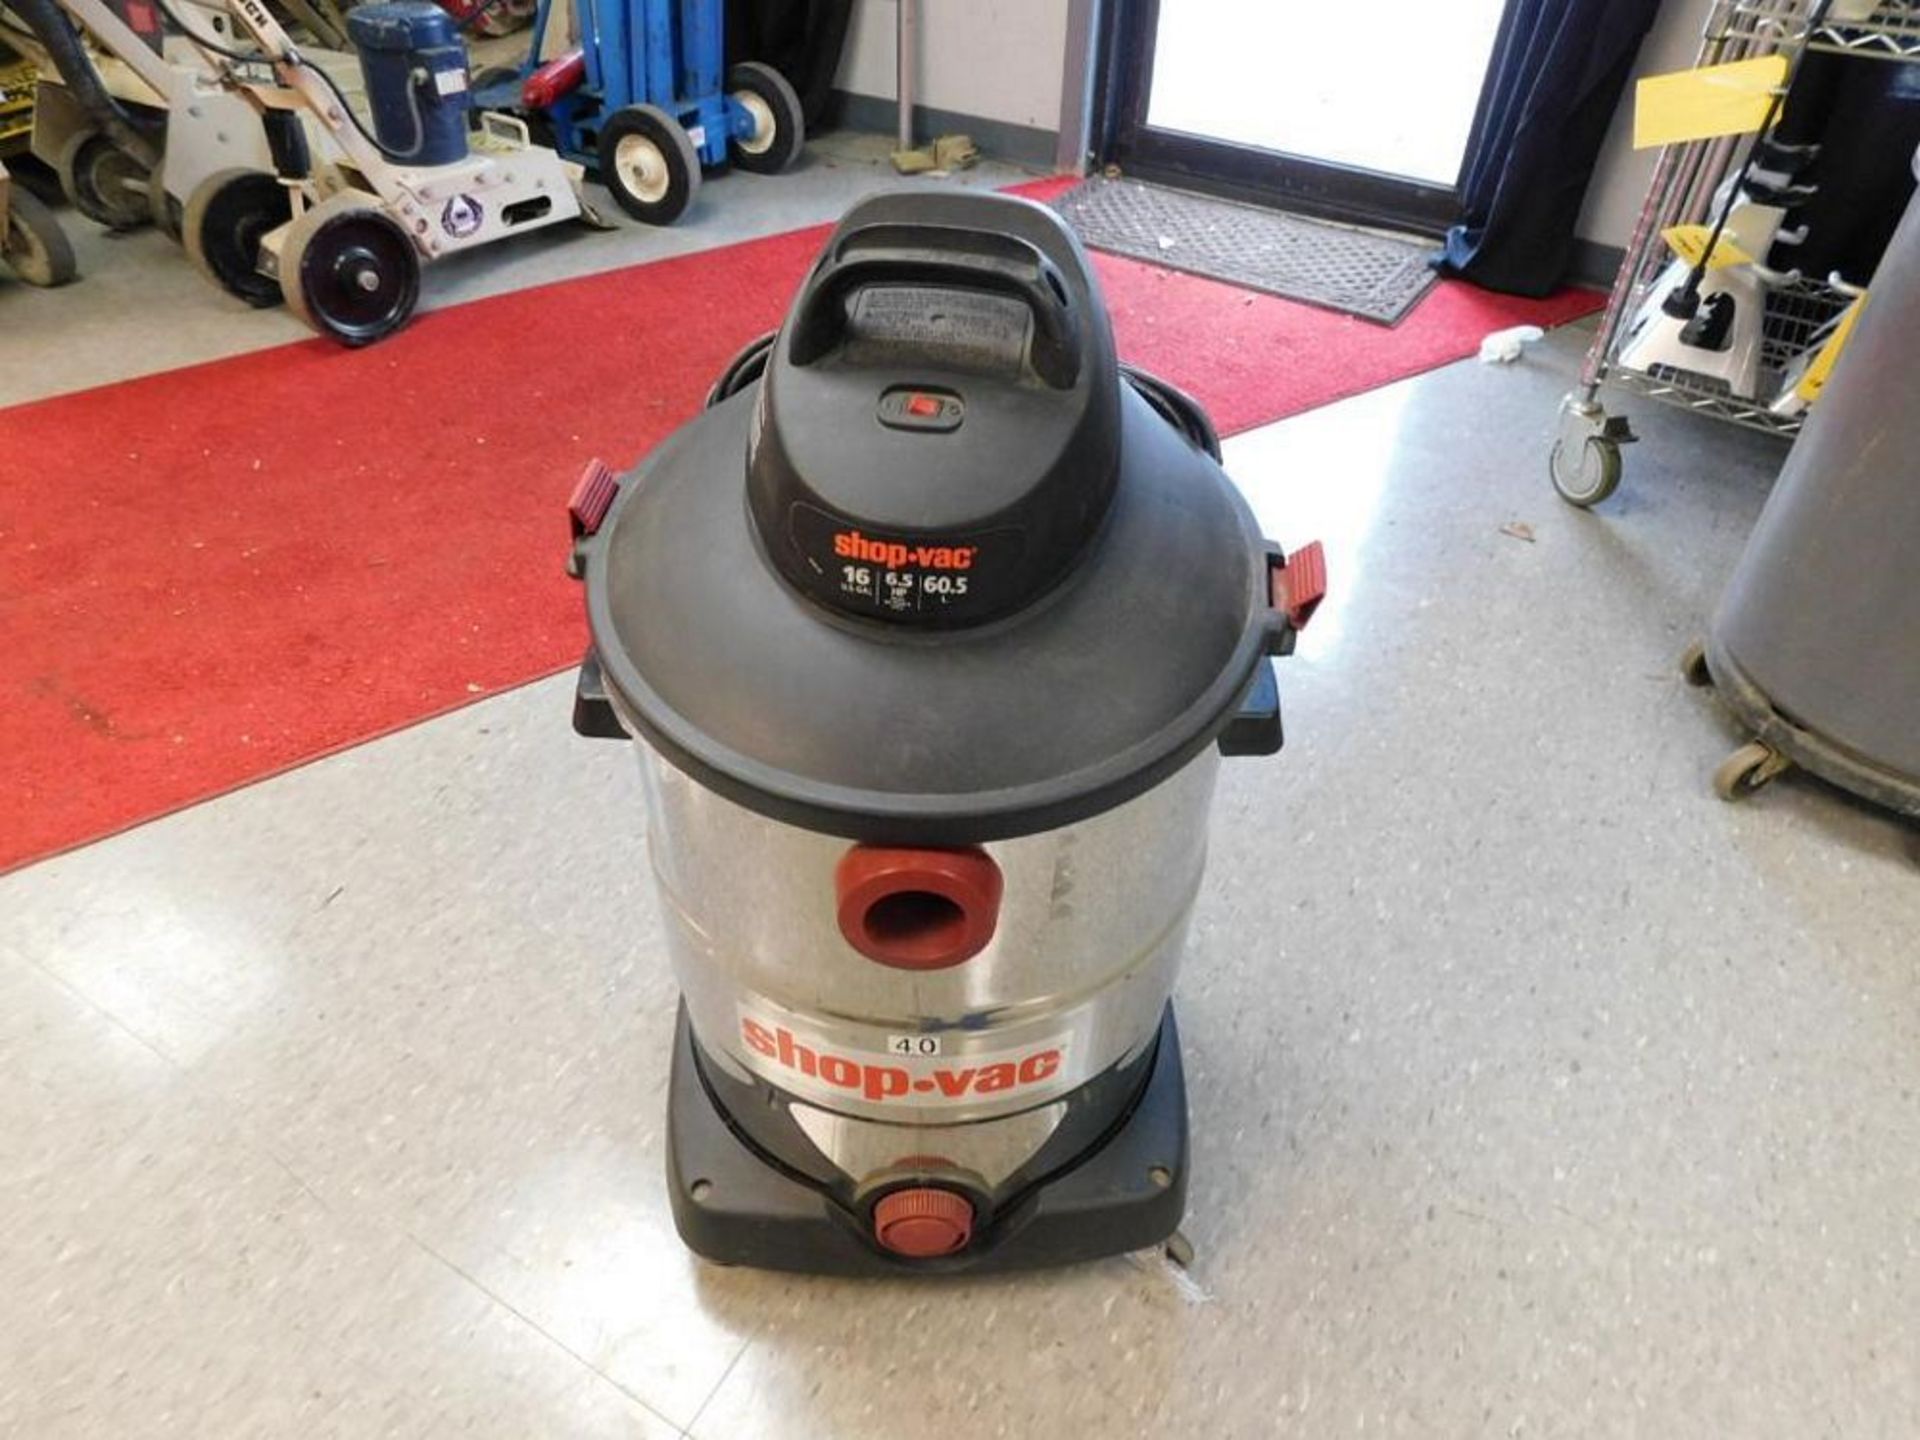 Shop Vac 16-Gallon Wet/Dry Vacuum 6.5 HP (#40) (LOCATION: 318 N. Milwaukee Ave., Wheeling, IL